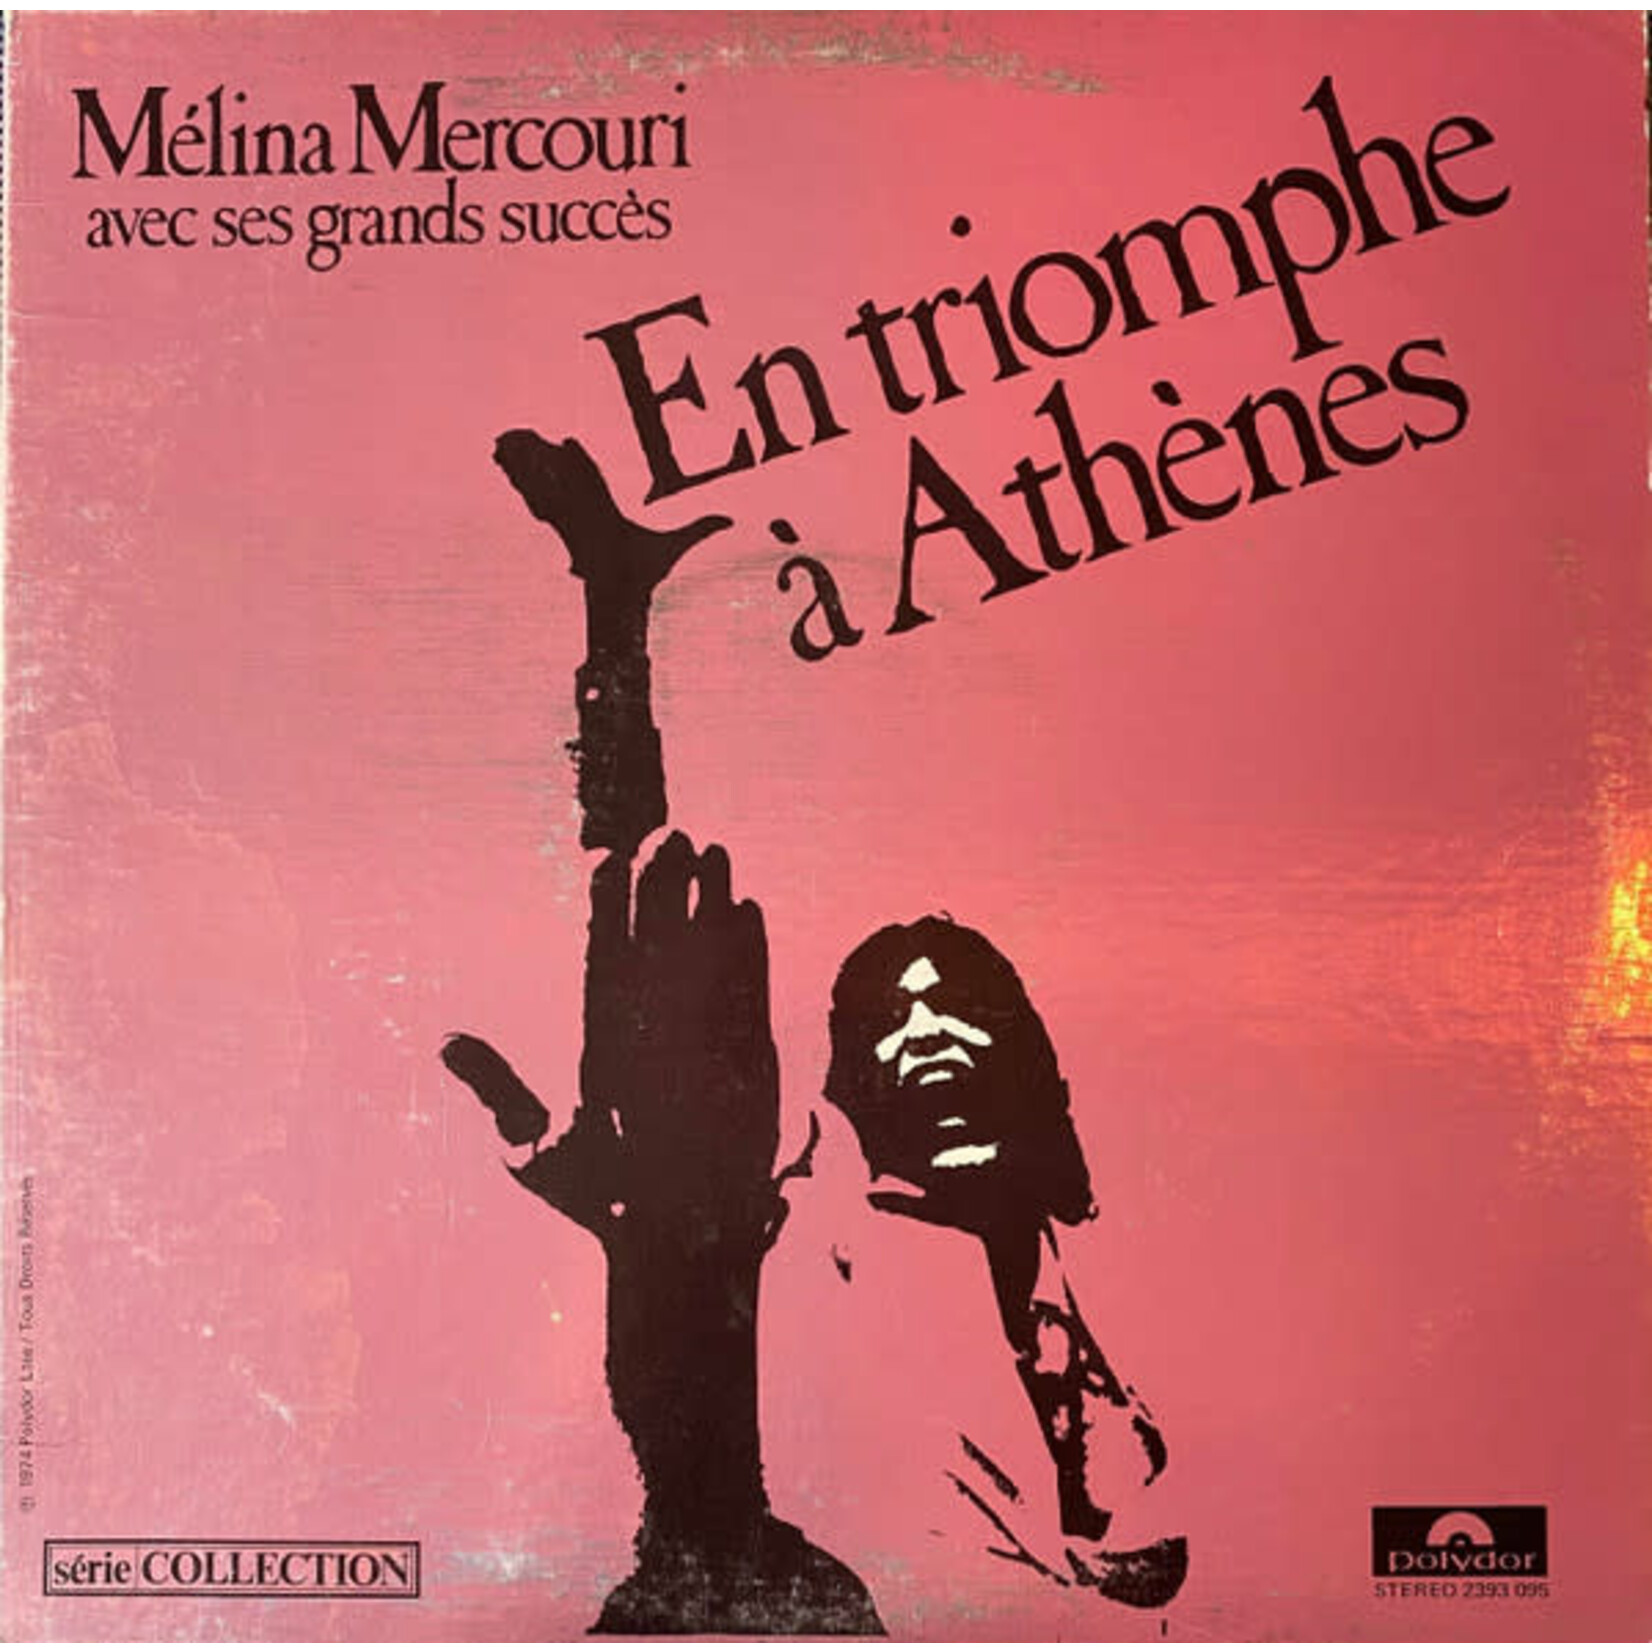 Melina Mercouri – EnTriomphe À Athènes Avec Ses Grands Succès (VG, 1974, LP, Polydor – 2393 095)